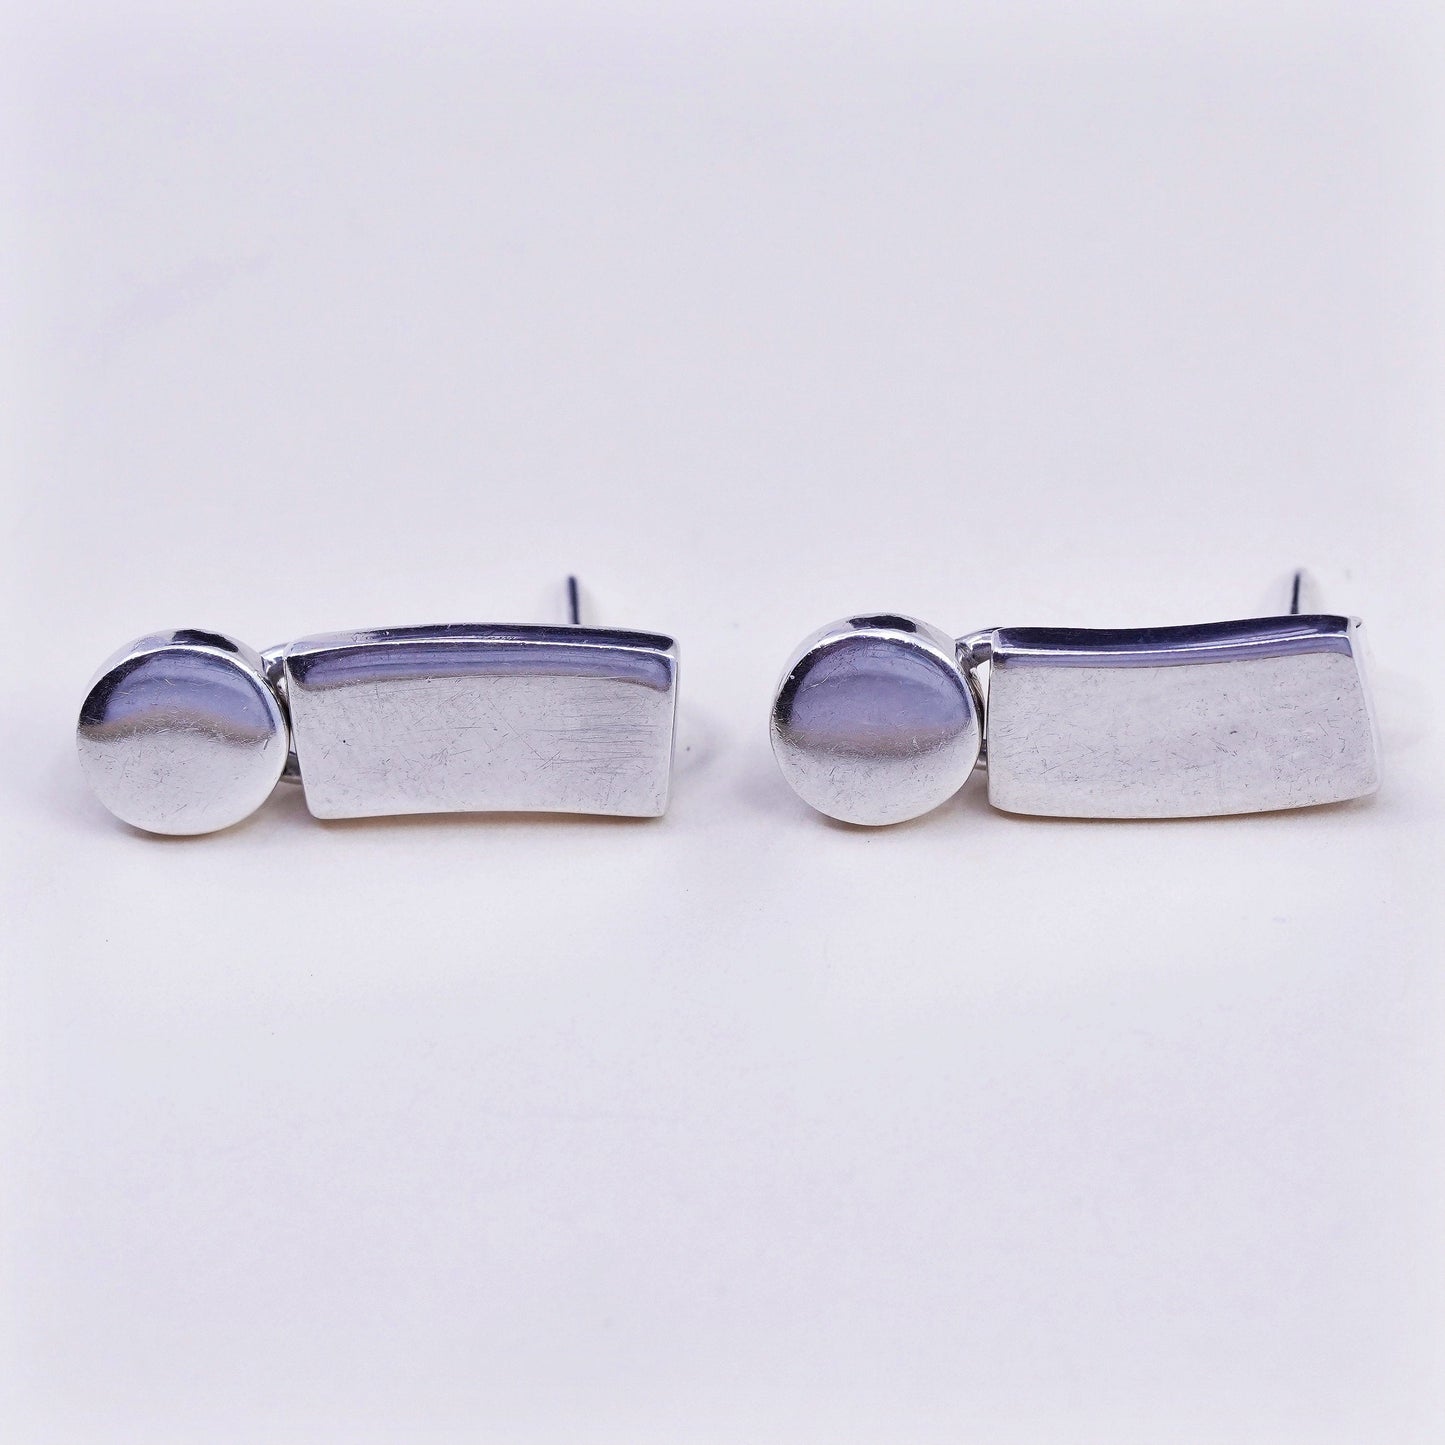 mexico sterling silver handmade earrings, 925 modern studs circle dangles